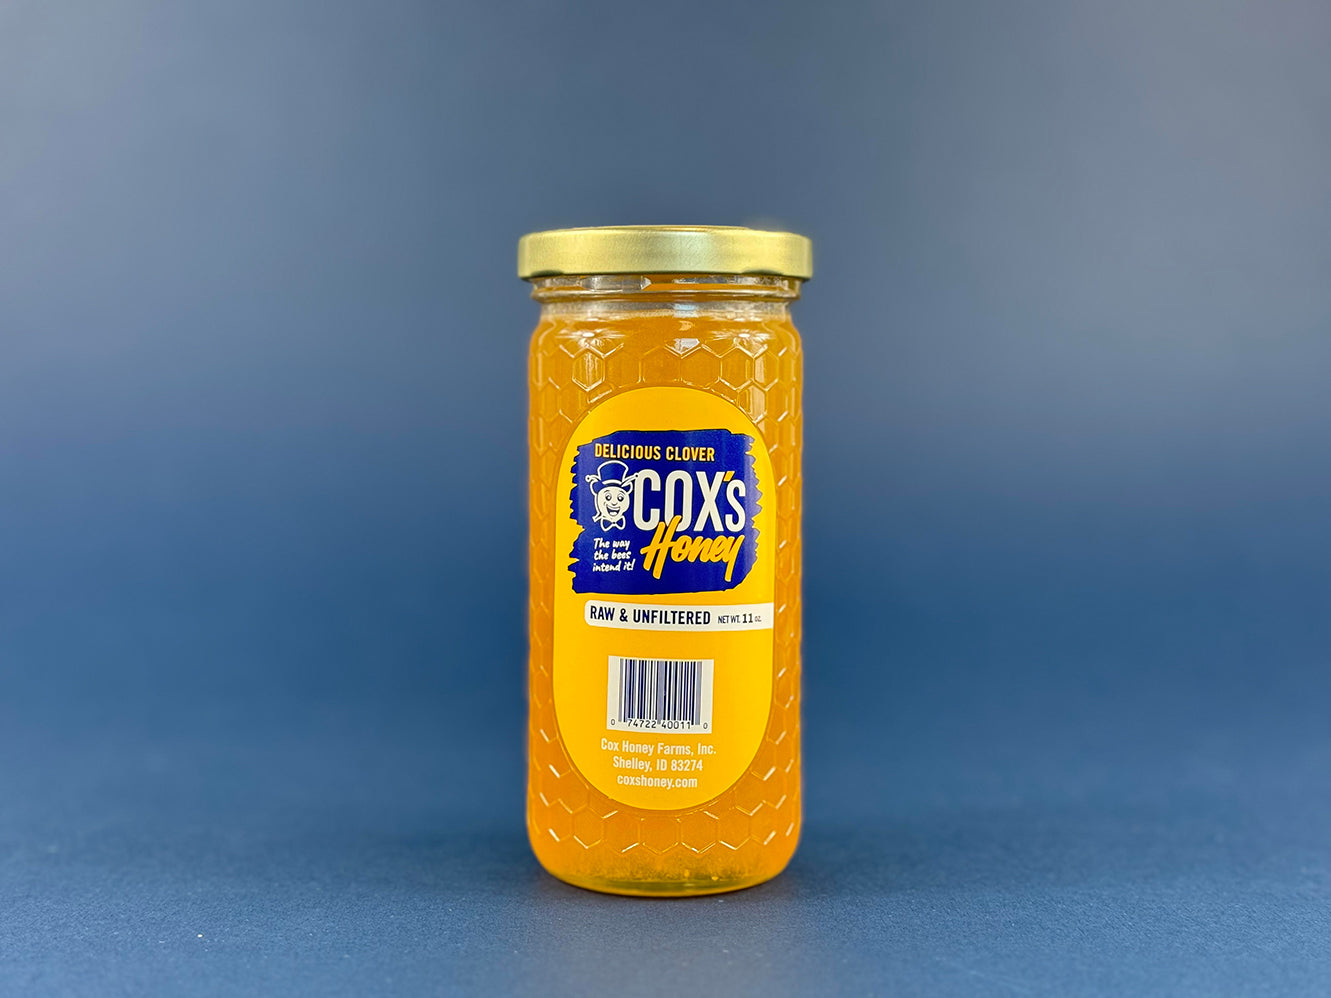 Cox's Honey raw, unfiltered 11 oz Clover Honey Glass Jar